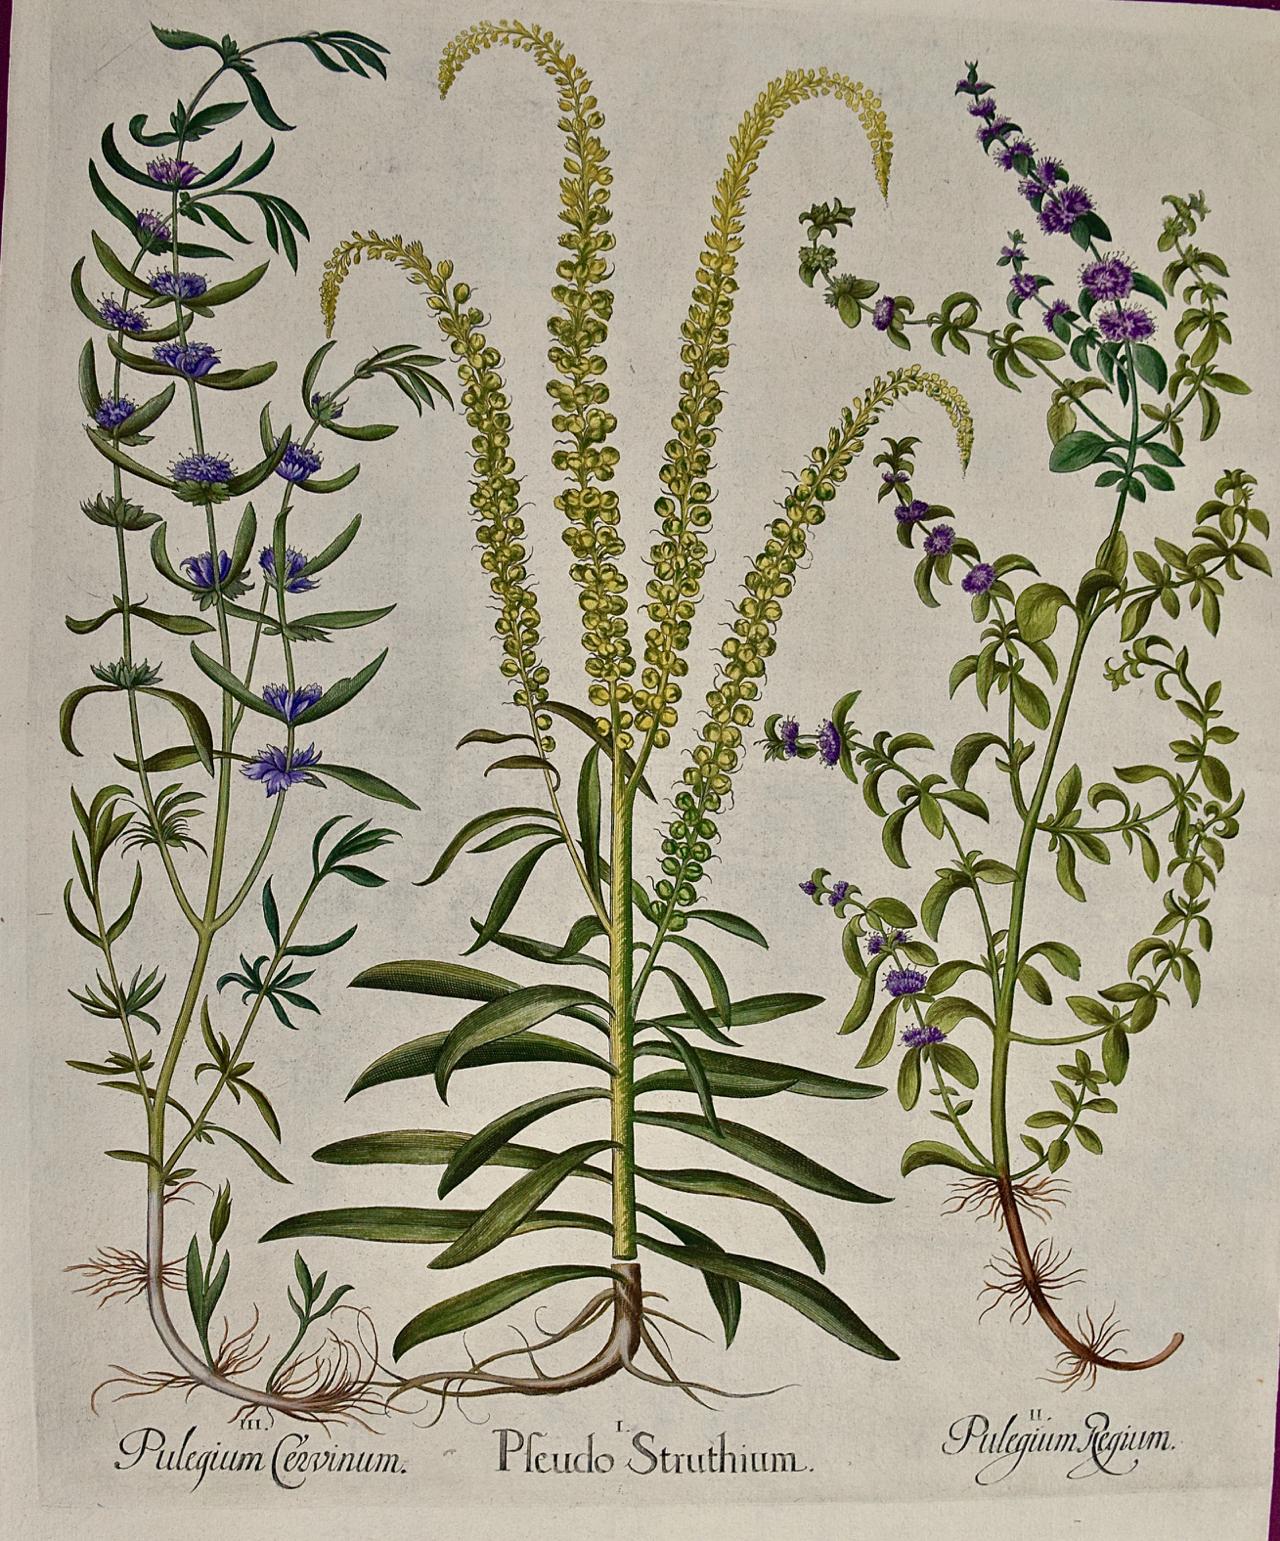 Besler Hand-colored Botanical Engraving of Flowering Peppermint Plants  